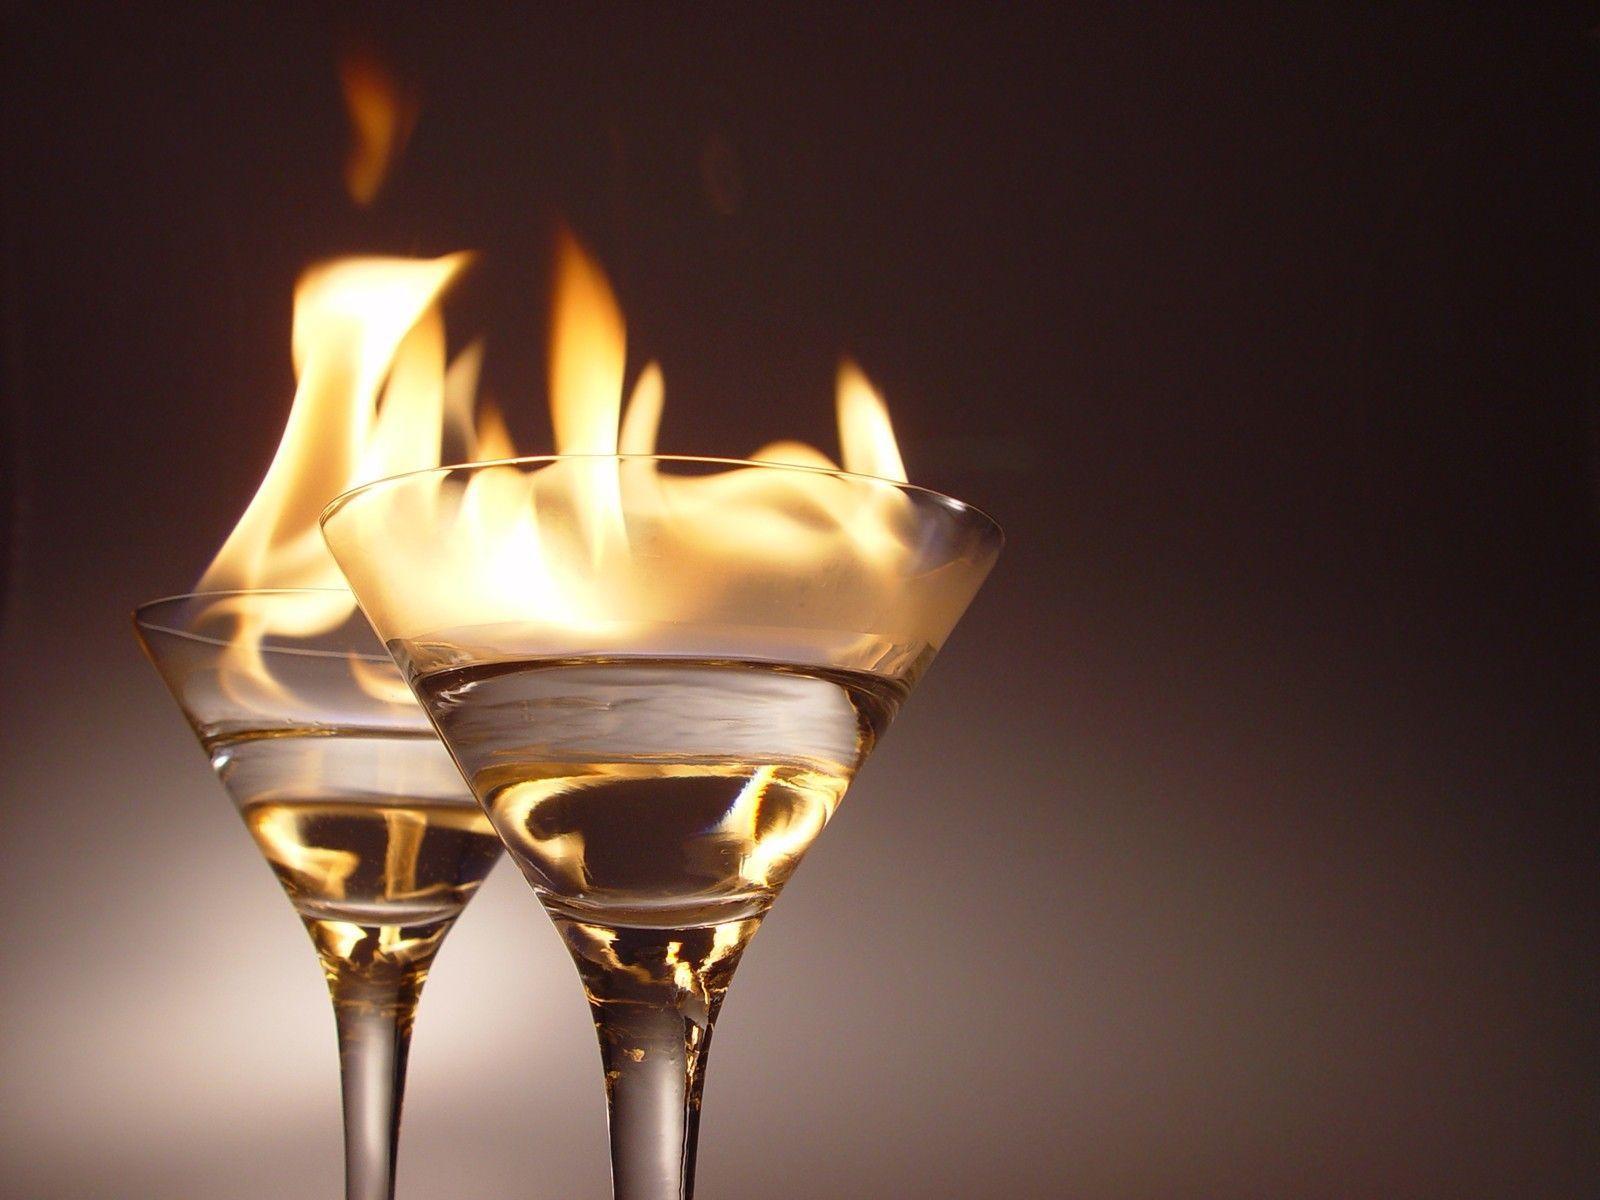 Flames fire glasses alcohol wine champagne wallpaper. AllWallpaper